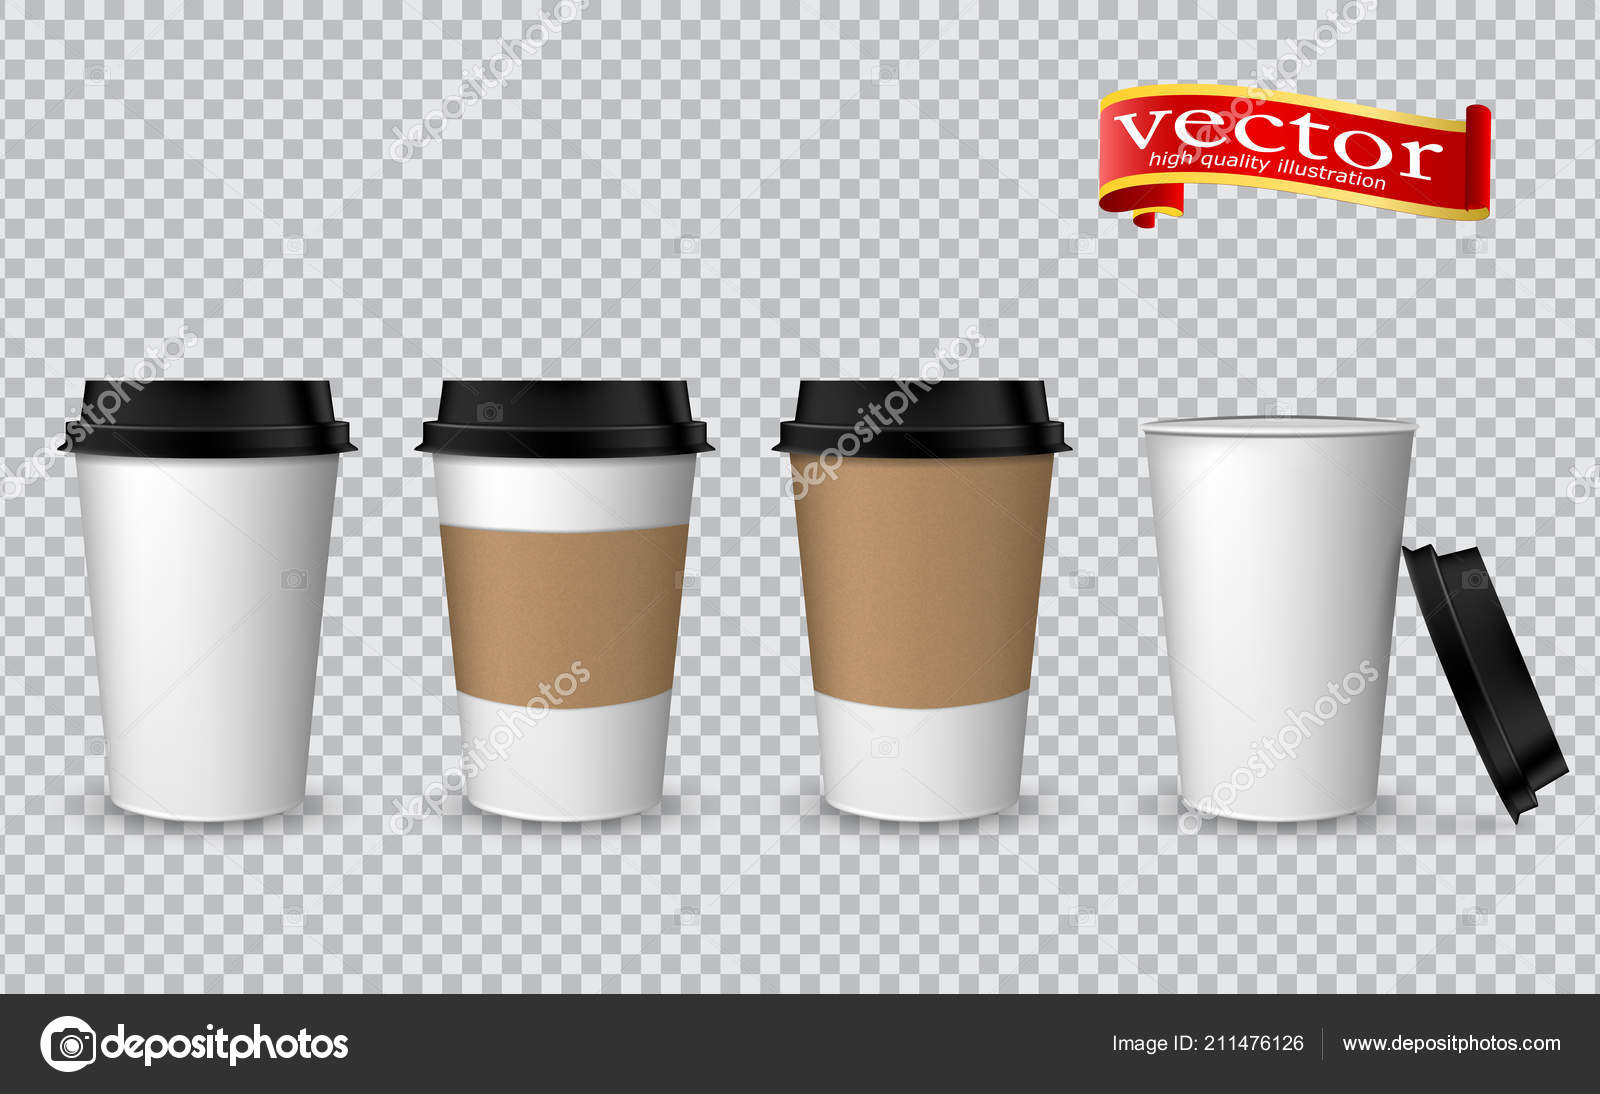 https://st4.depositphotos.com/13159112/21147/v/1600/depositphotos_211476126-stock-illustration-blank-realistic-coffee-cup-mockup.jpg